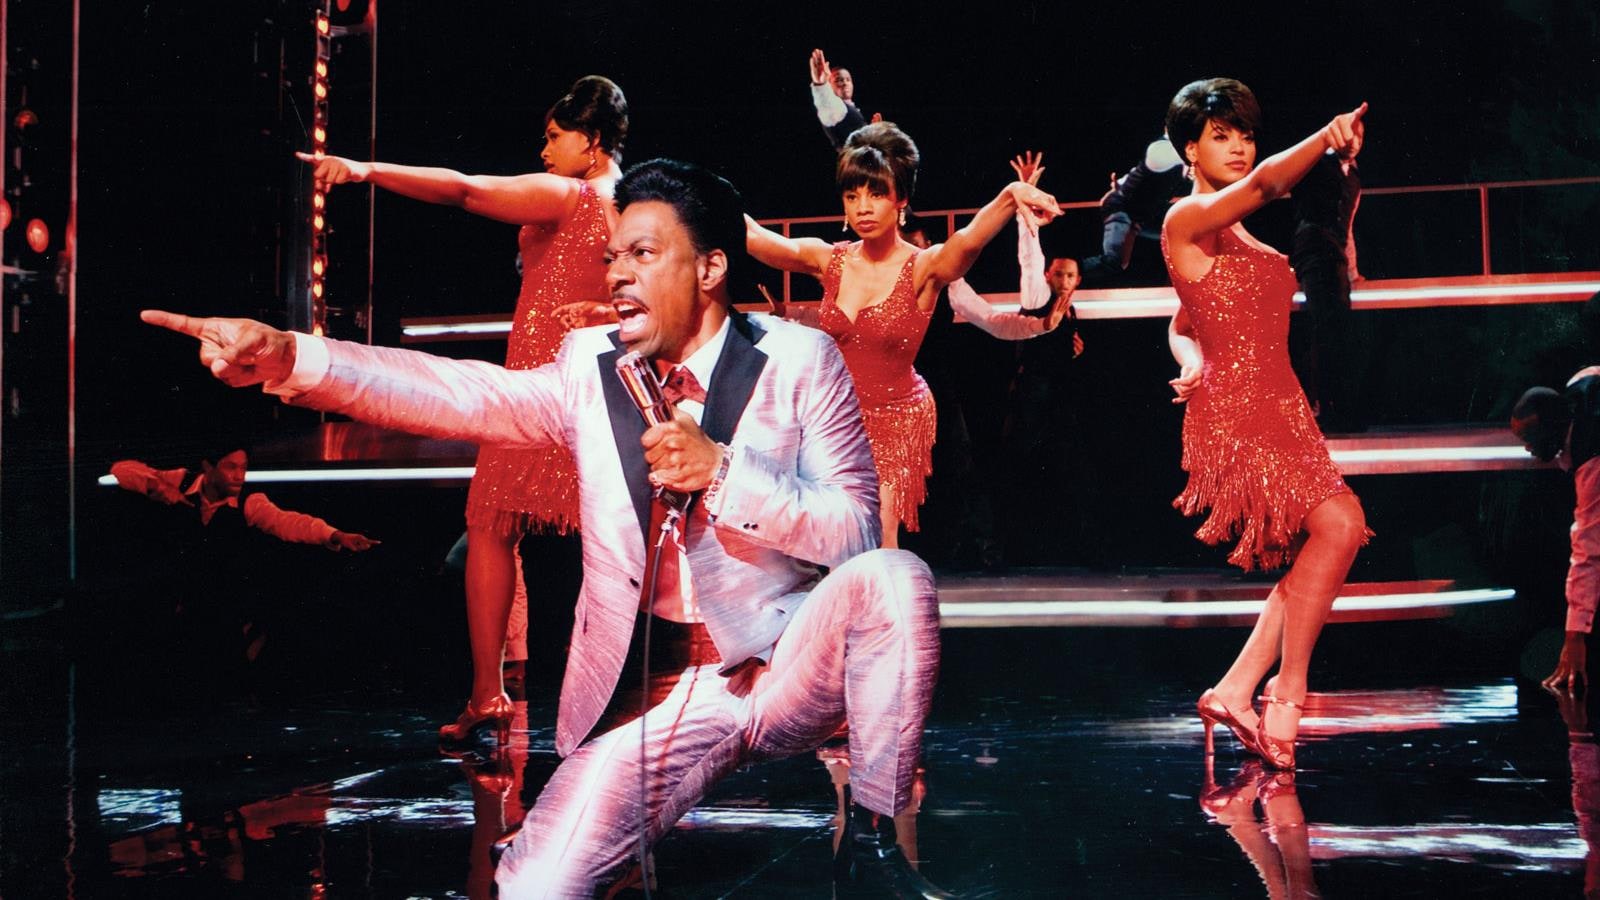 A man (Eddie Murphy) kneeling on stage singing in front of three girls in red dresses.